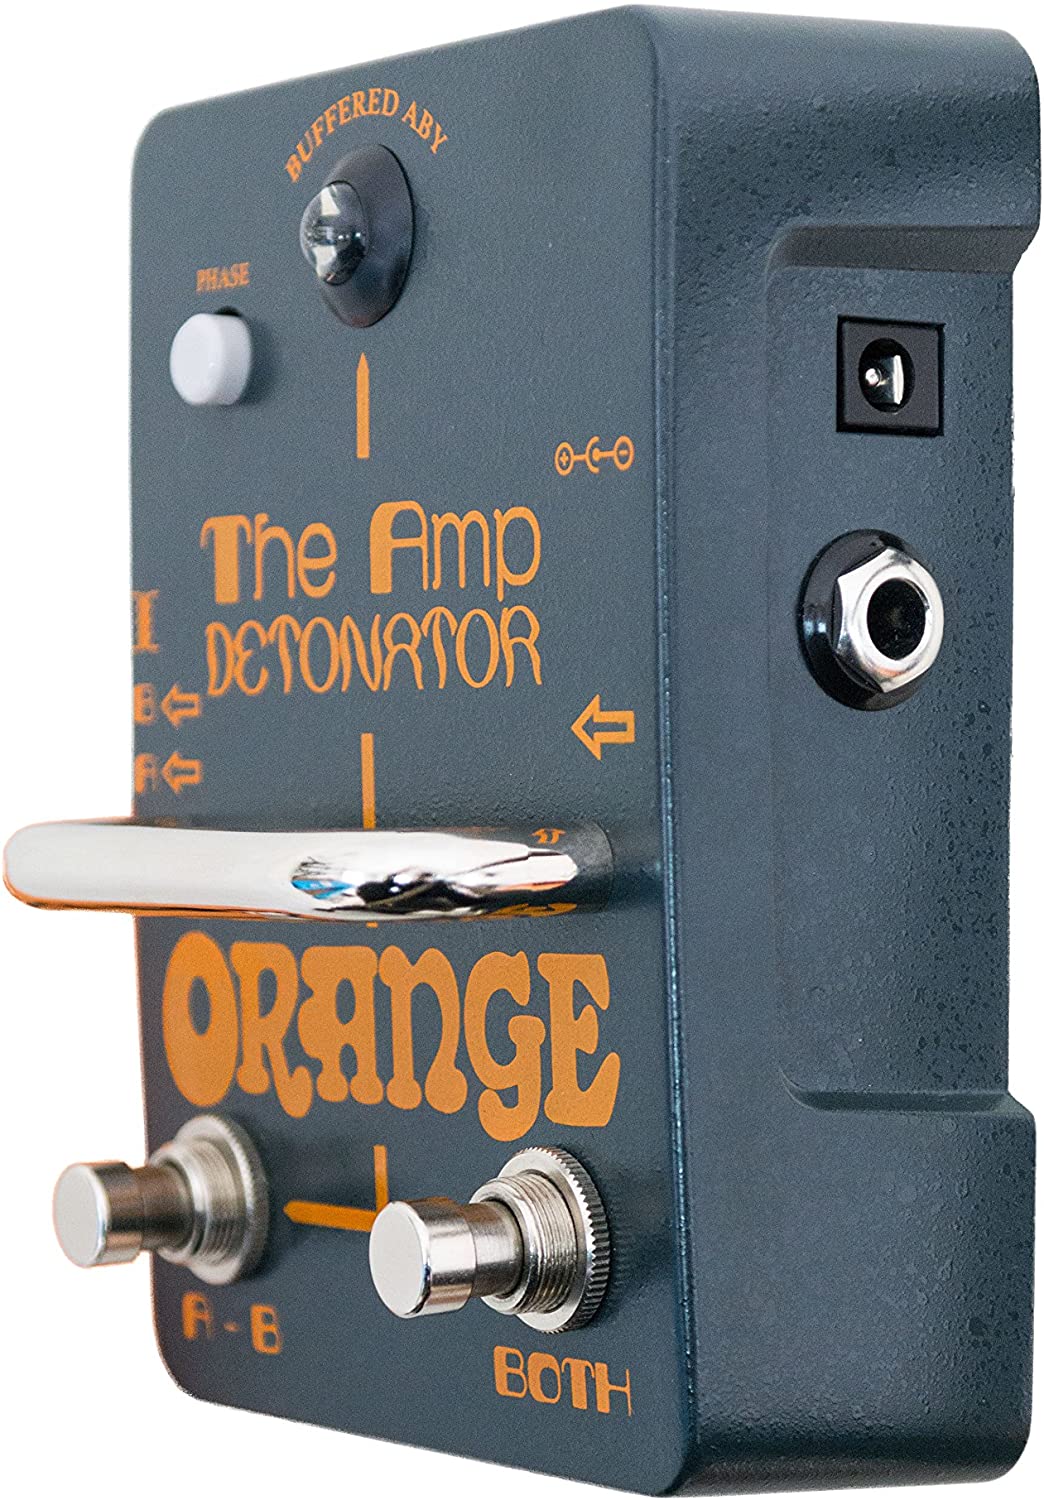 Orange Amp Detonator Buffered ABY Switcher